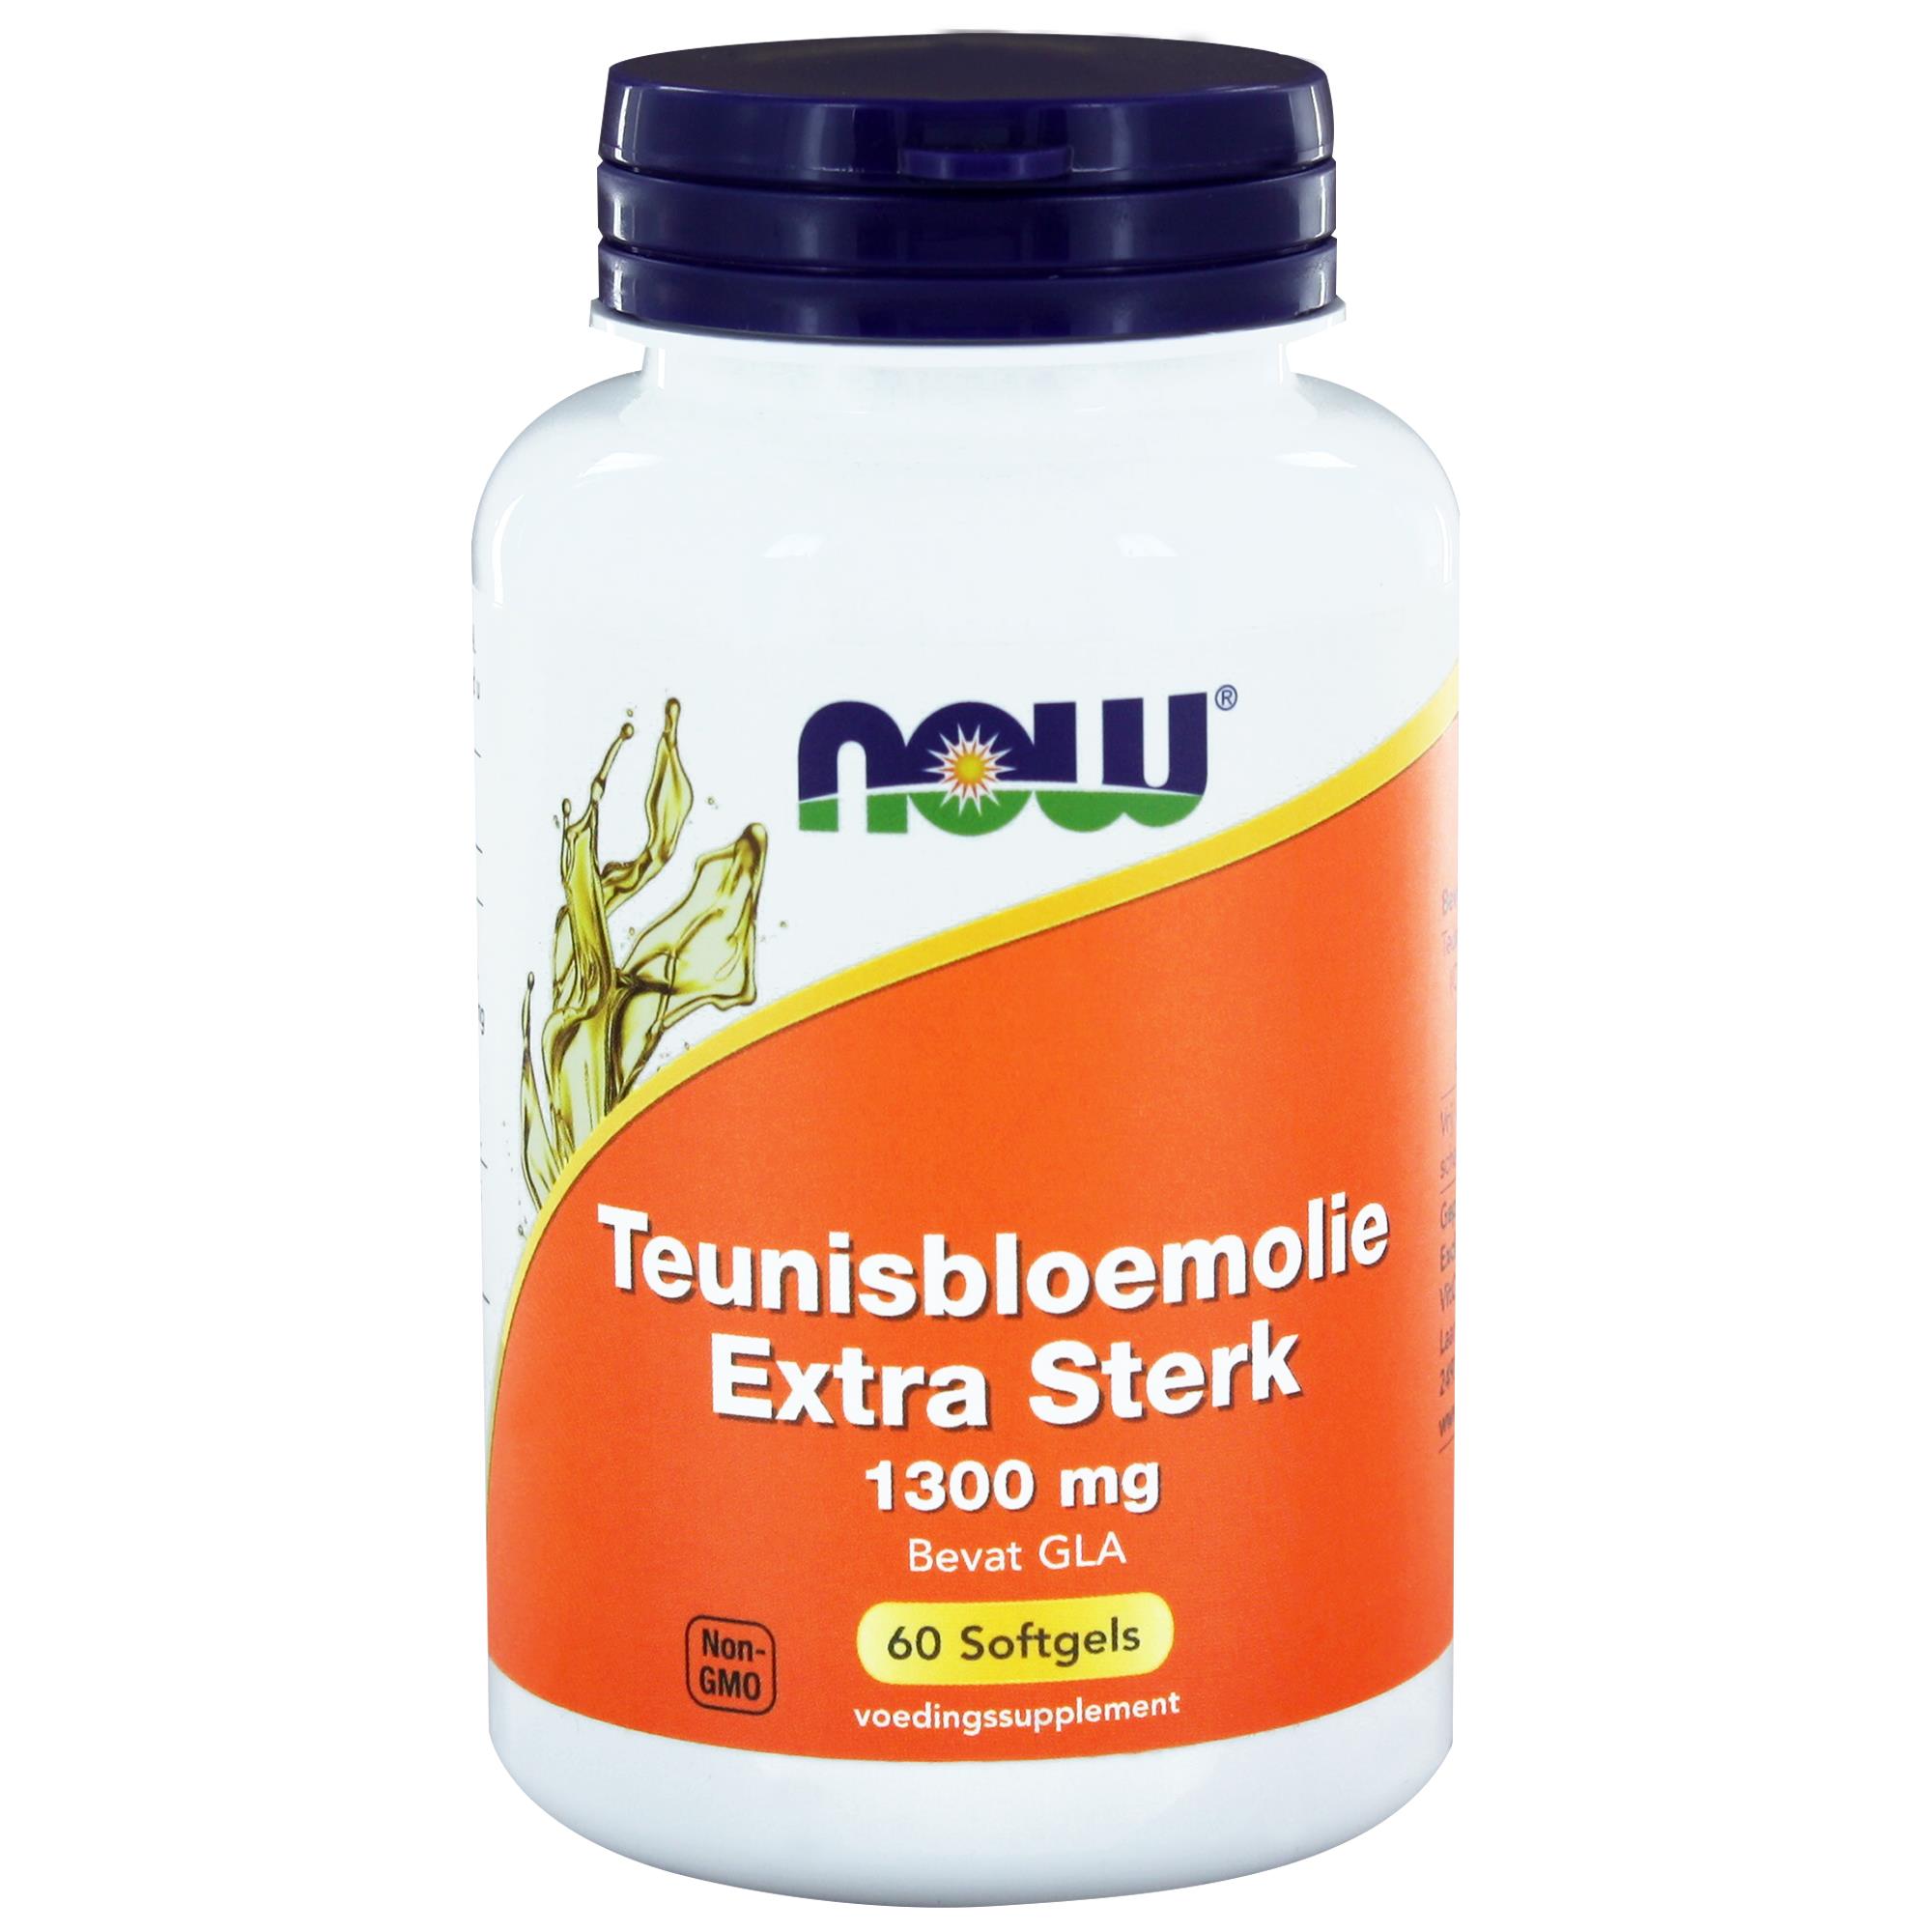 Teunisbloemolie Extra Sterk (1300 mg) - 60 softgels